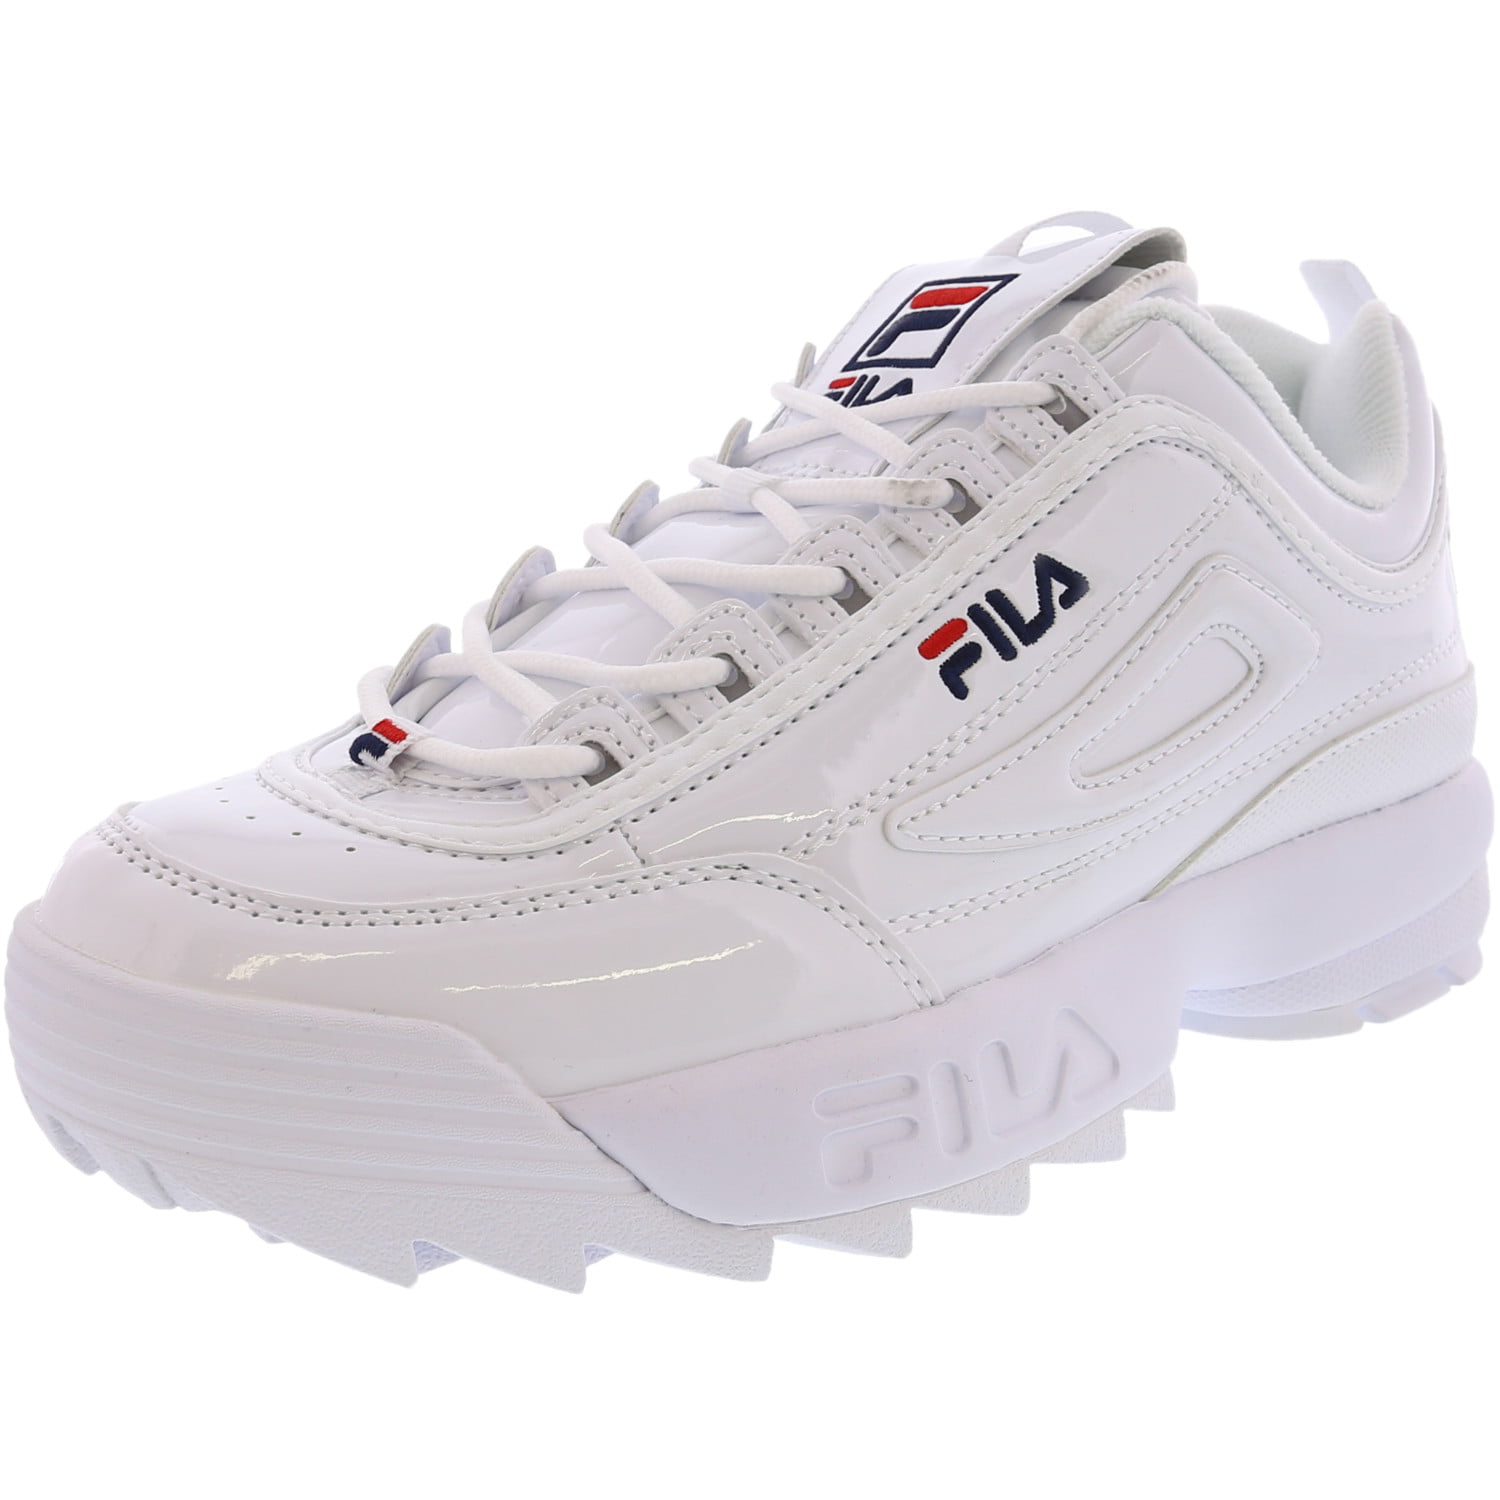 Fila - Fila Women's Disruptor Ii Premium Patent White / Navy Red Ankle ...